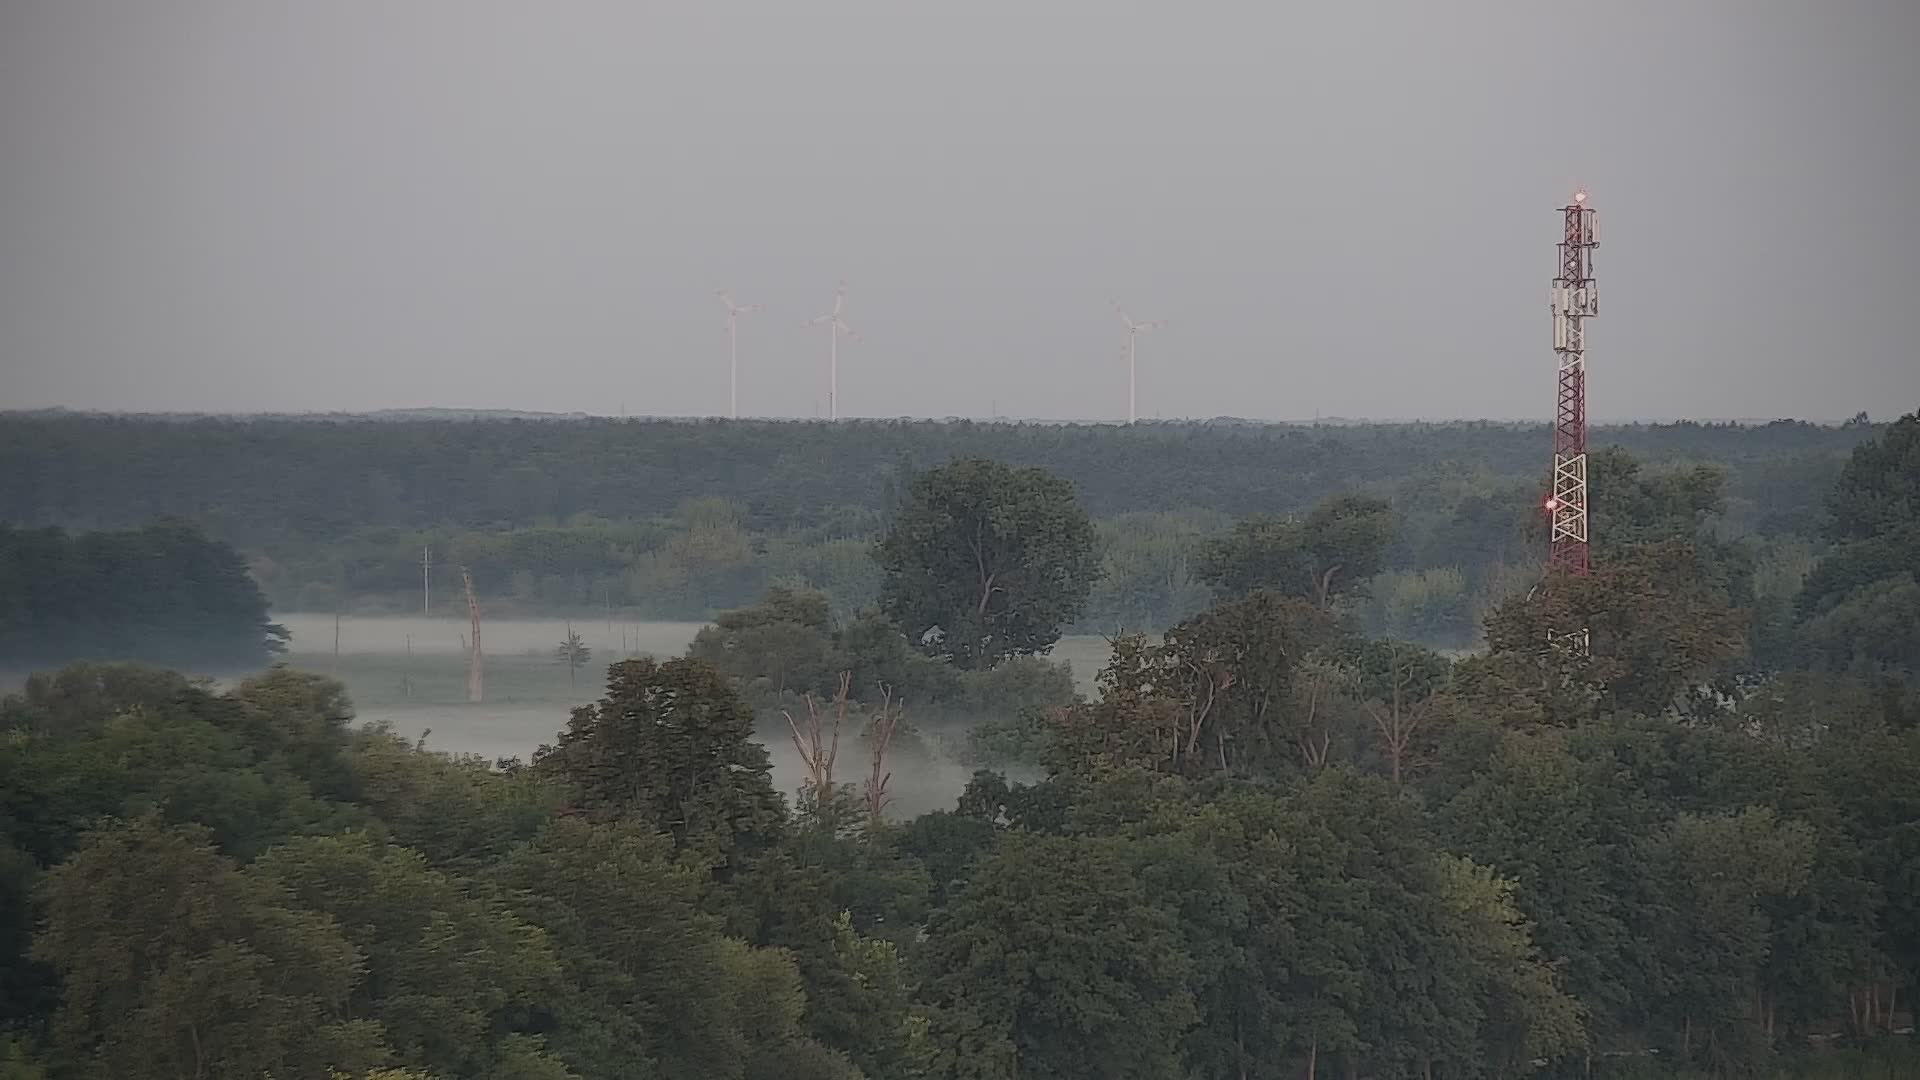 Wągrowiec - panorama miasta